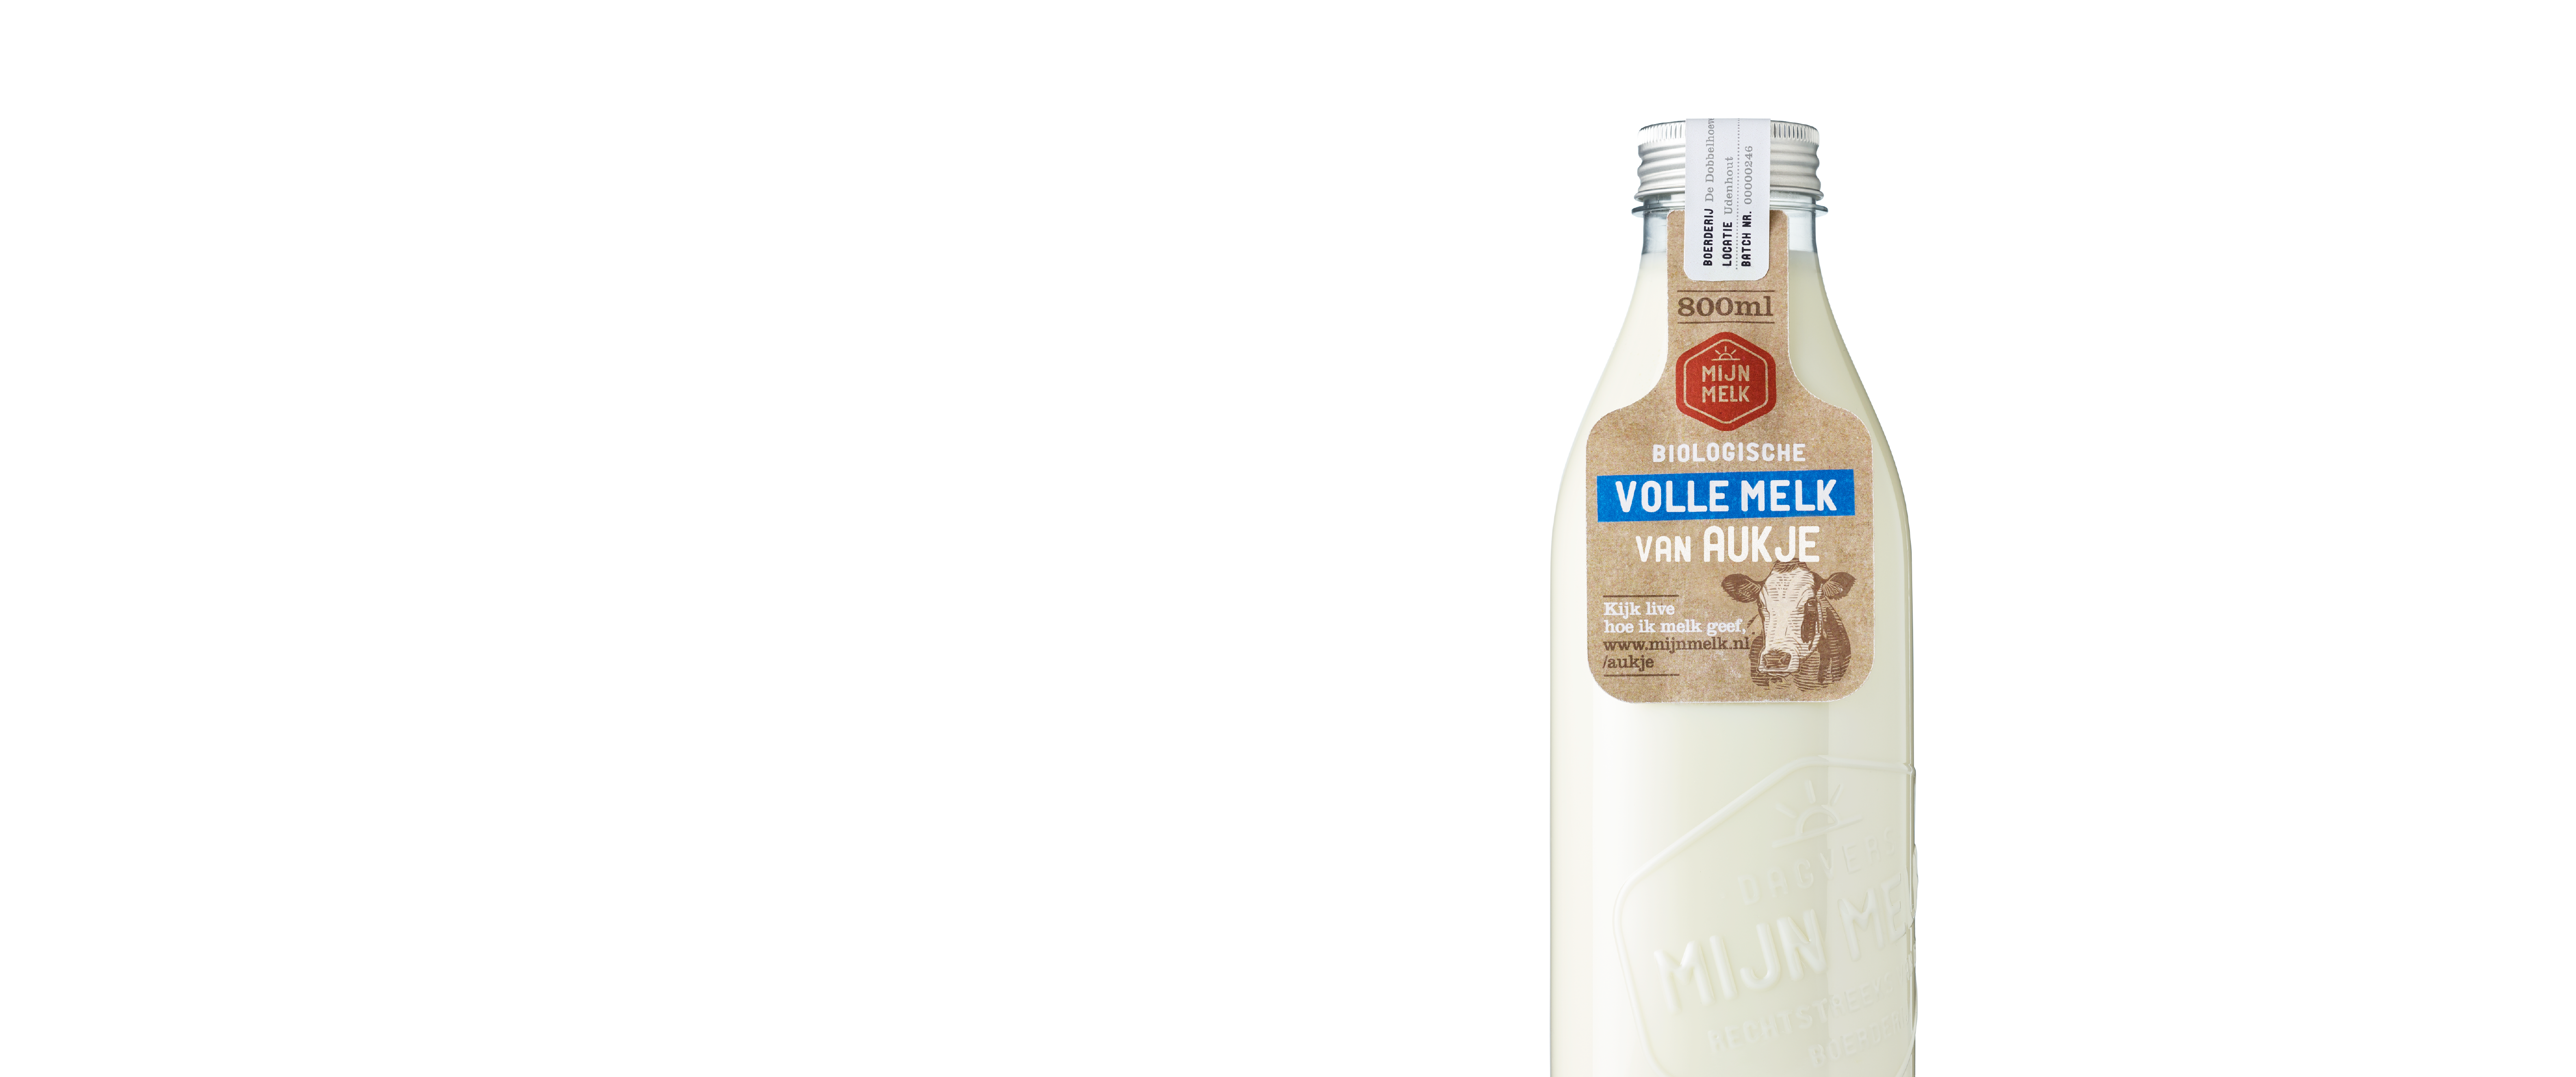 Iconic packaging design for the Milk Revolution